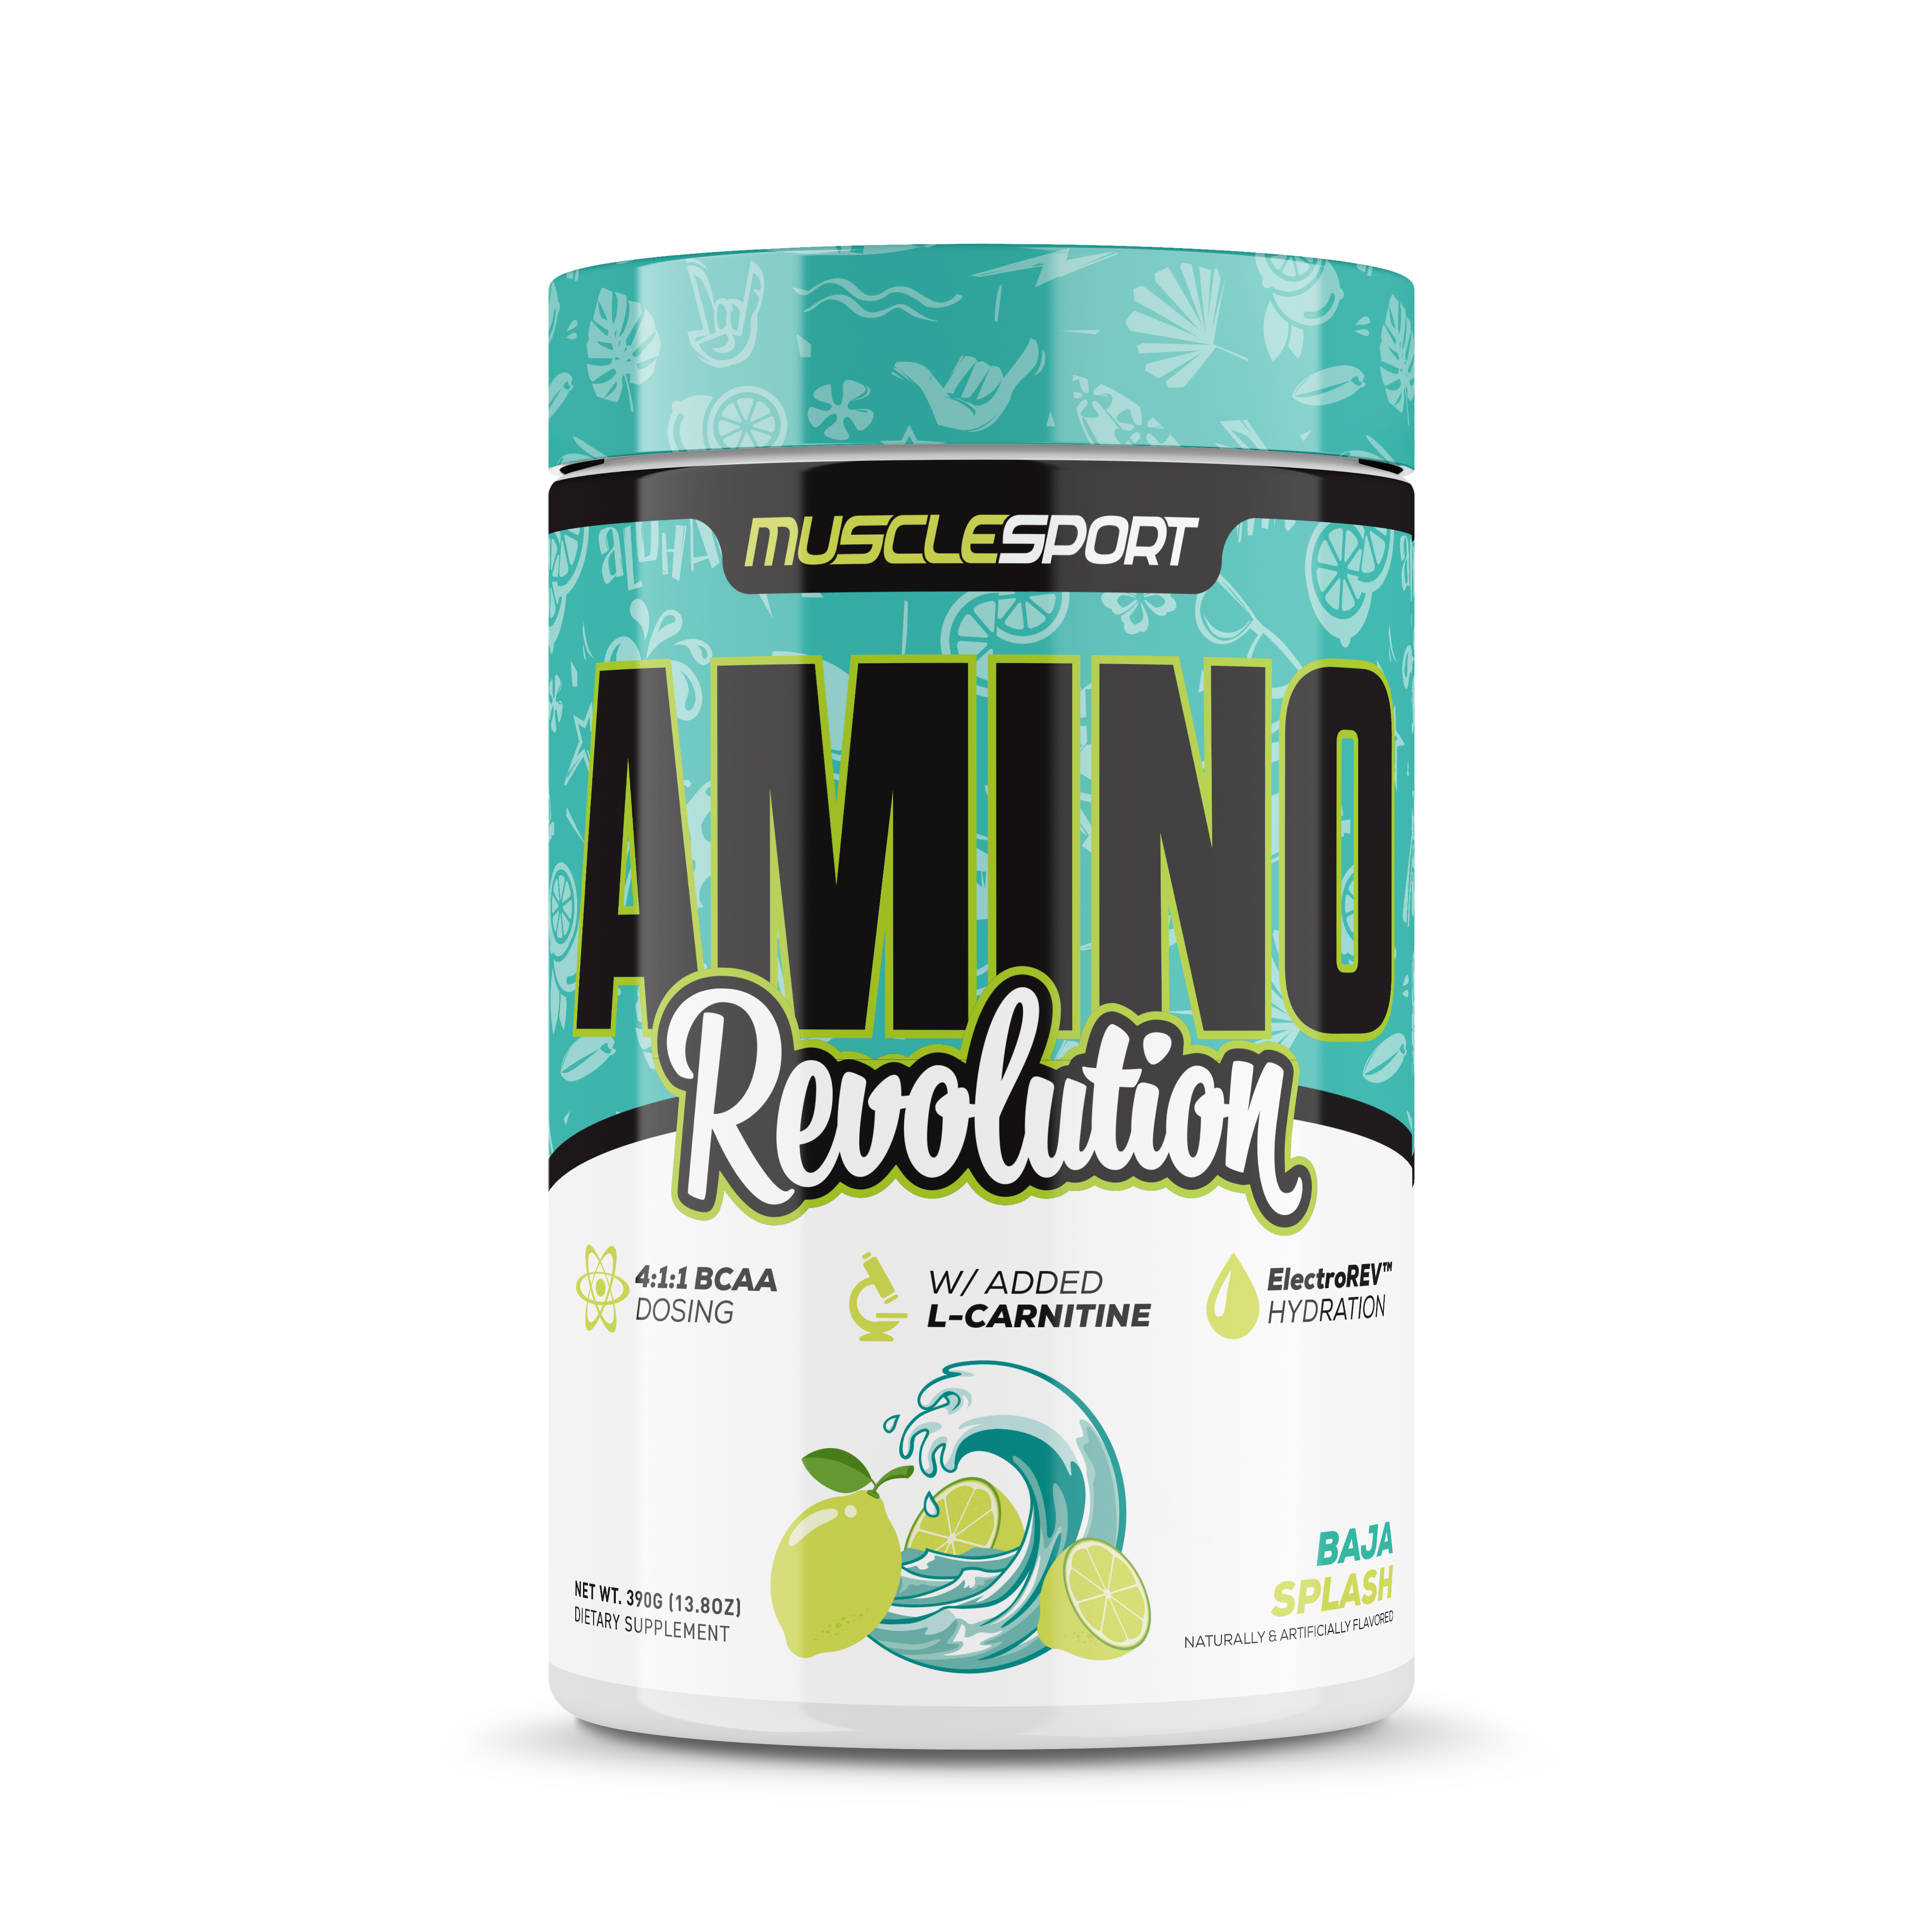 MuscleSport® Baja Splash Amino Revolution™